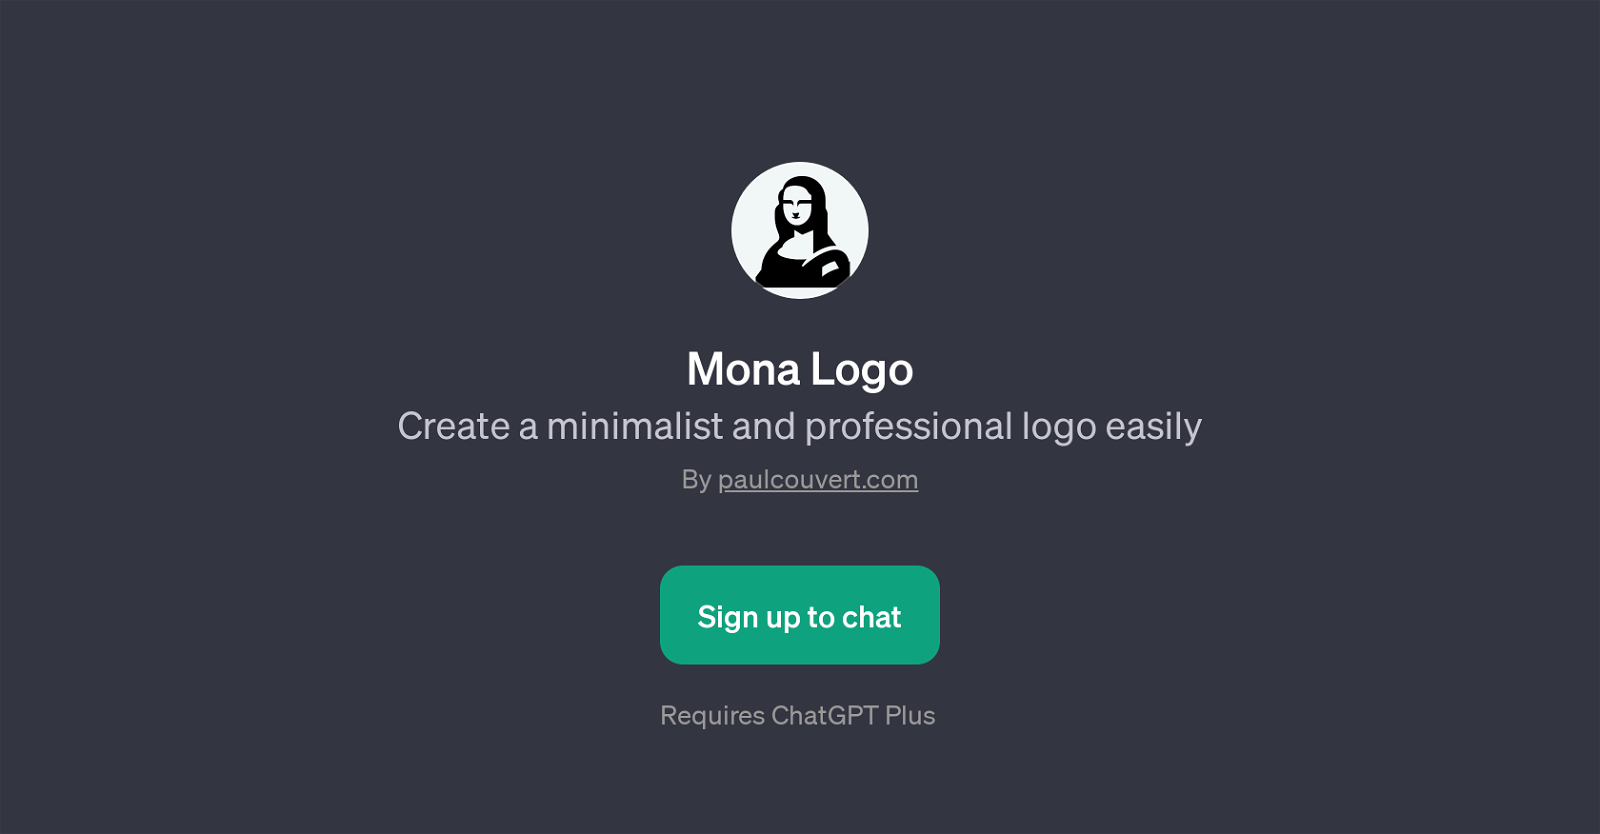 Mona Logo website